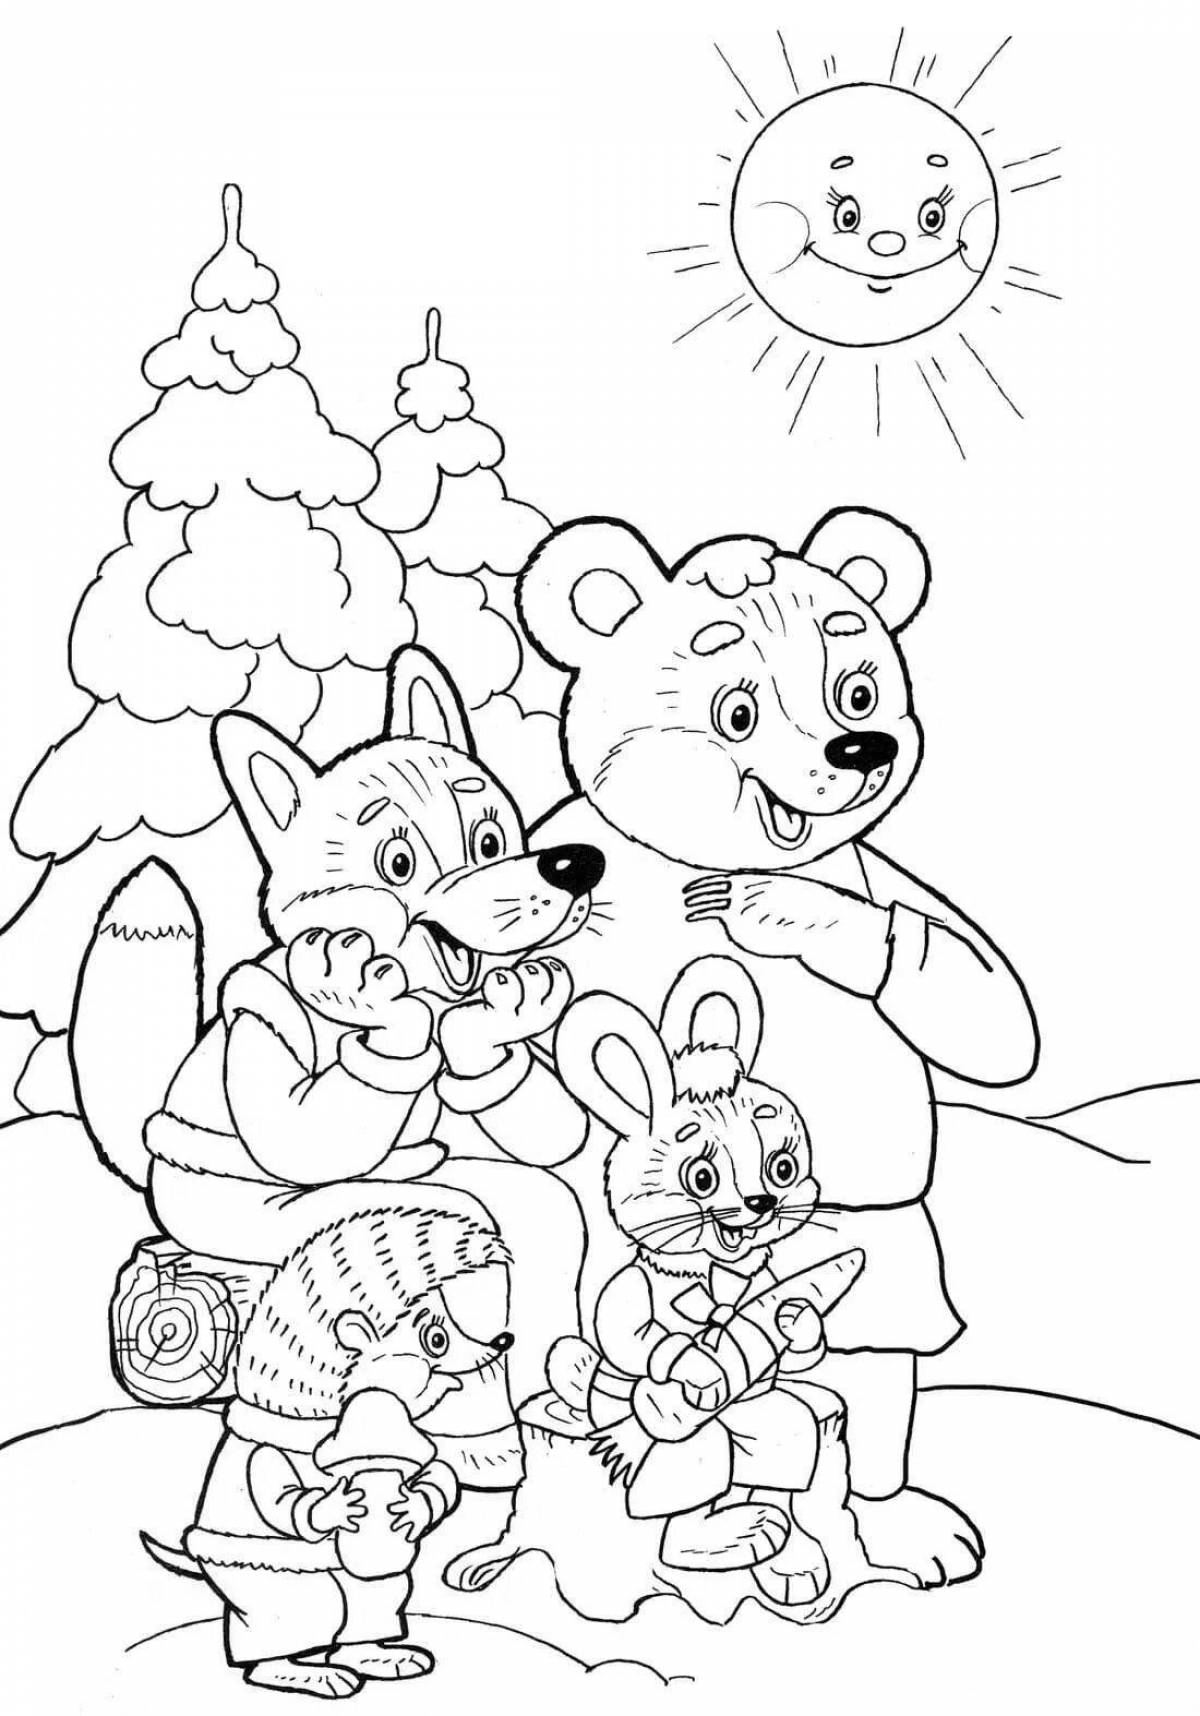 Cute bear and rabbit coloring book